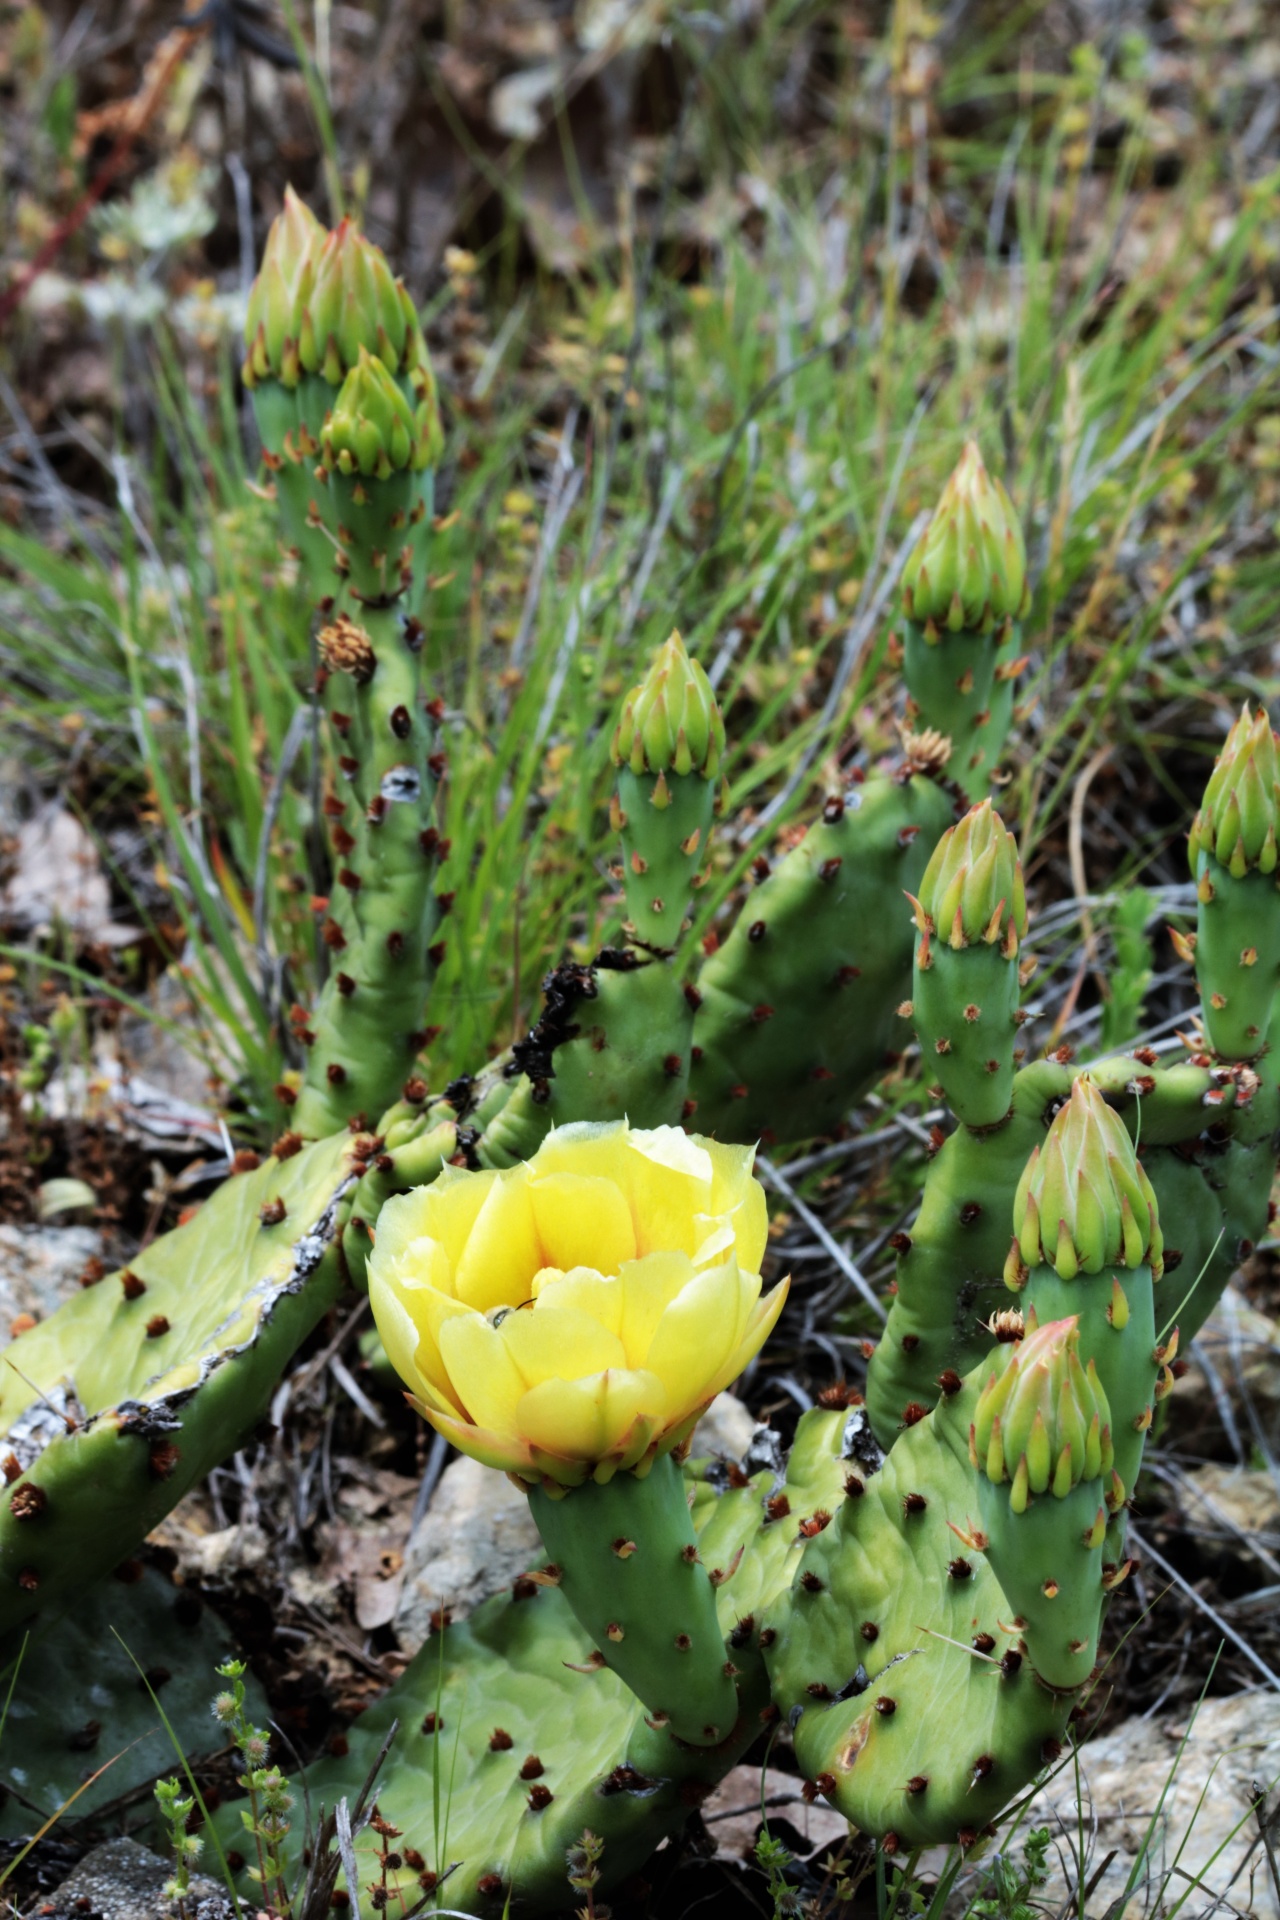 Prickly Pear Cactus Bloom en knoppen